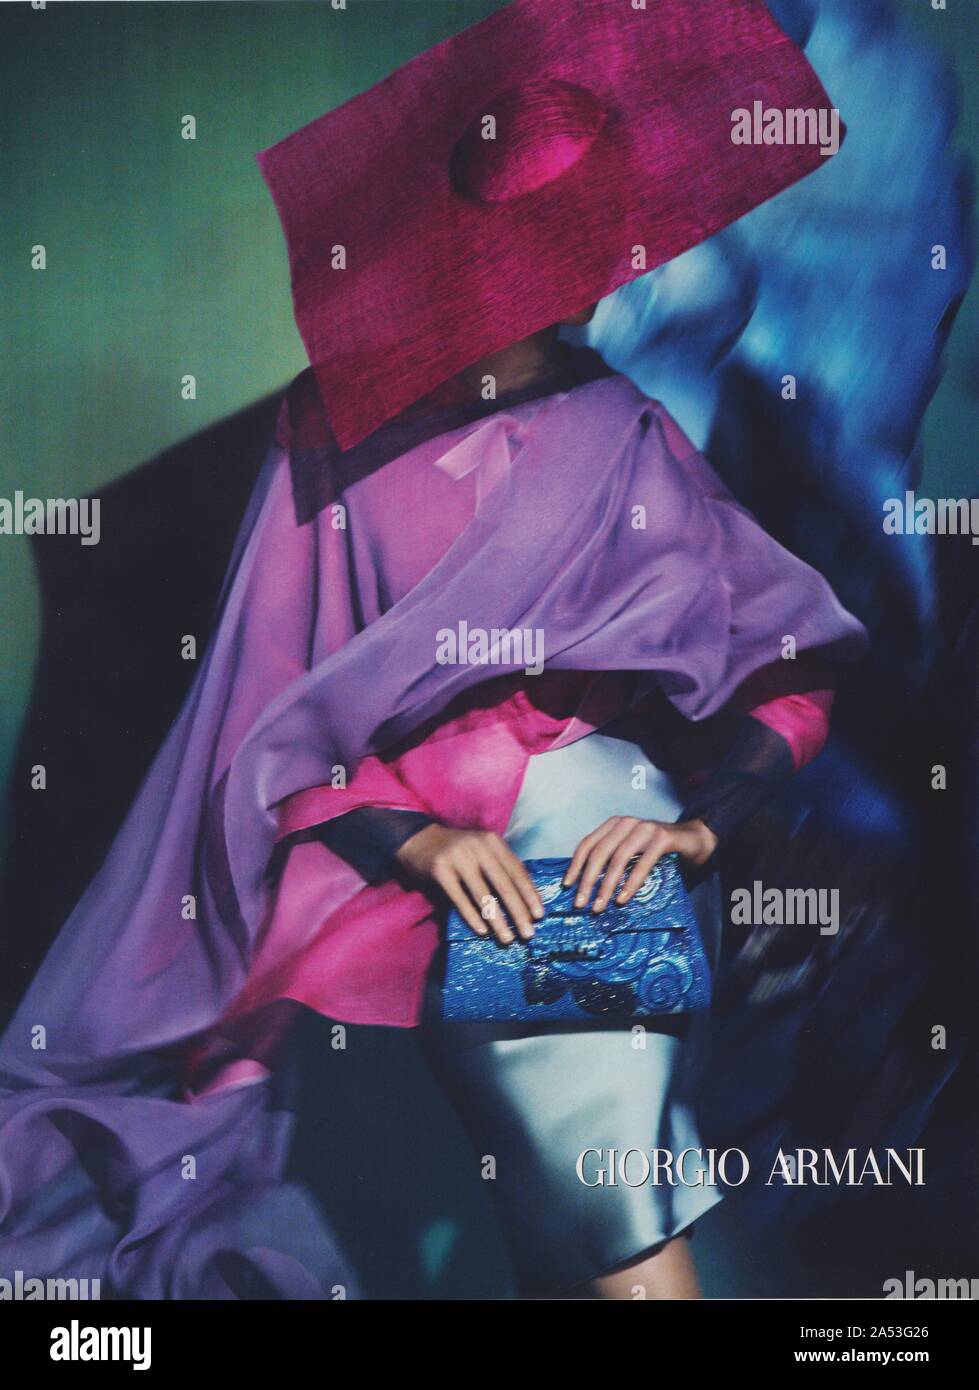 poster advertising Giorgio Armani with Karlina Caune in magazine from 2014, advertisement, creative Giorgio Armani advert from 2010s Stock Photo